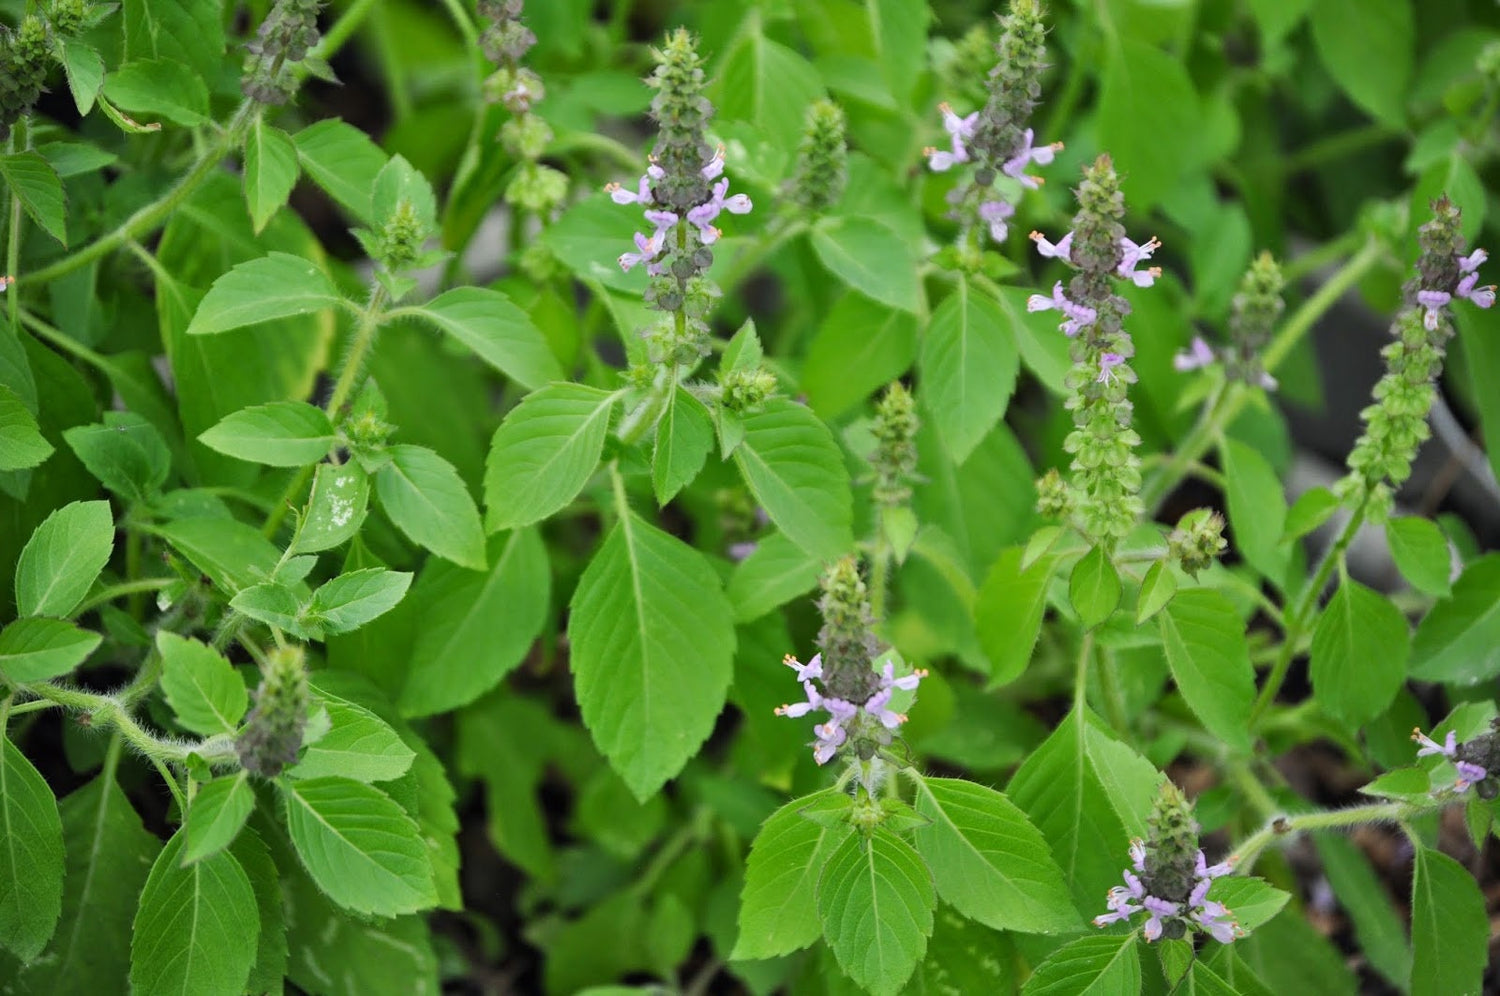 Tulsi Bulk Herb - Premium Quality Holy Basil Leaf - Ocimum tenuiflorum - Ayurvedic Adaptogenic Herb